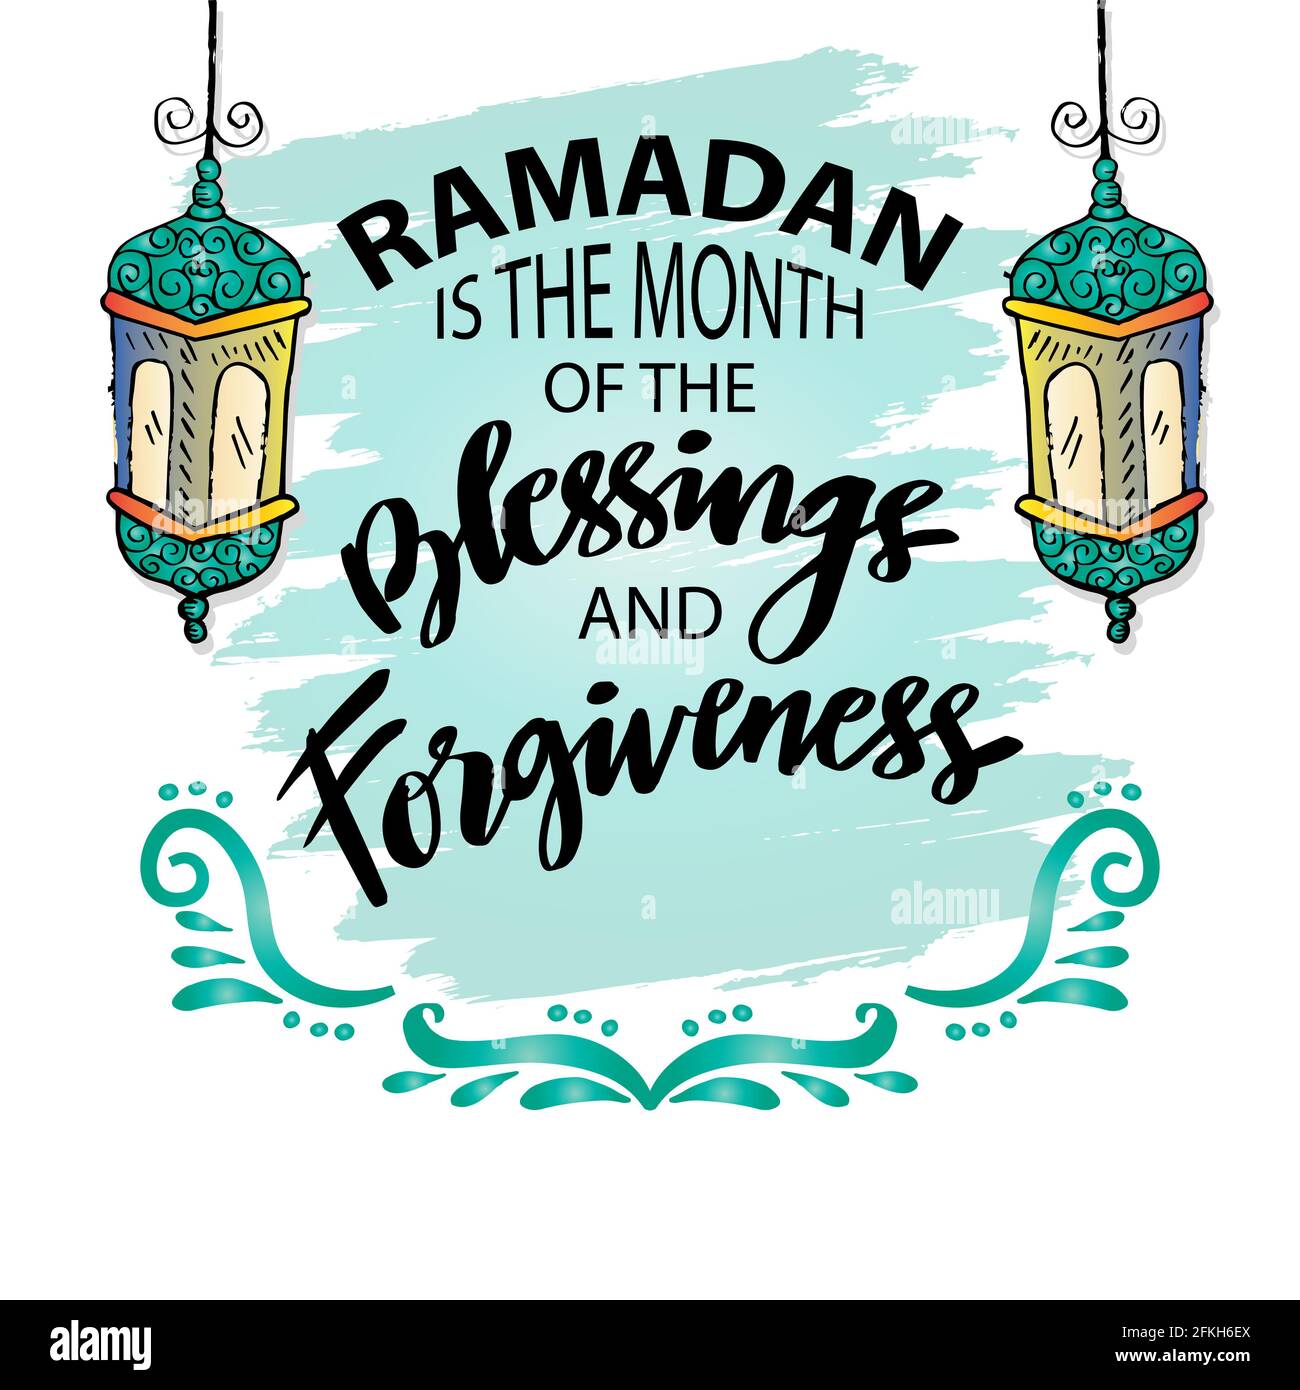 Ramadan quotes